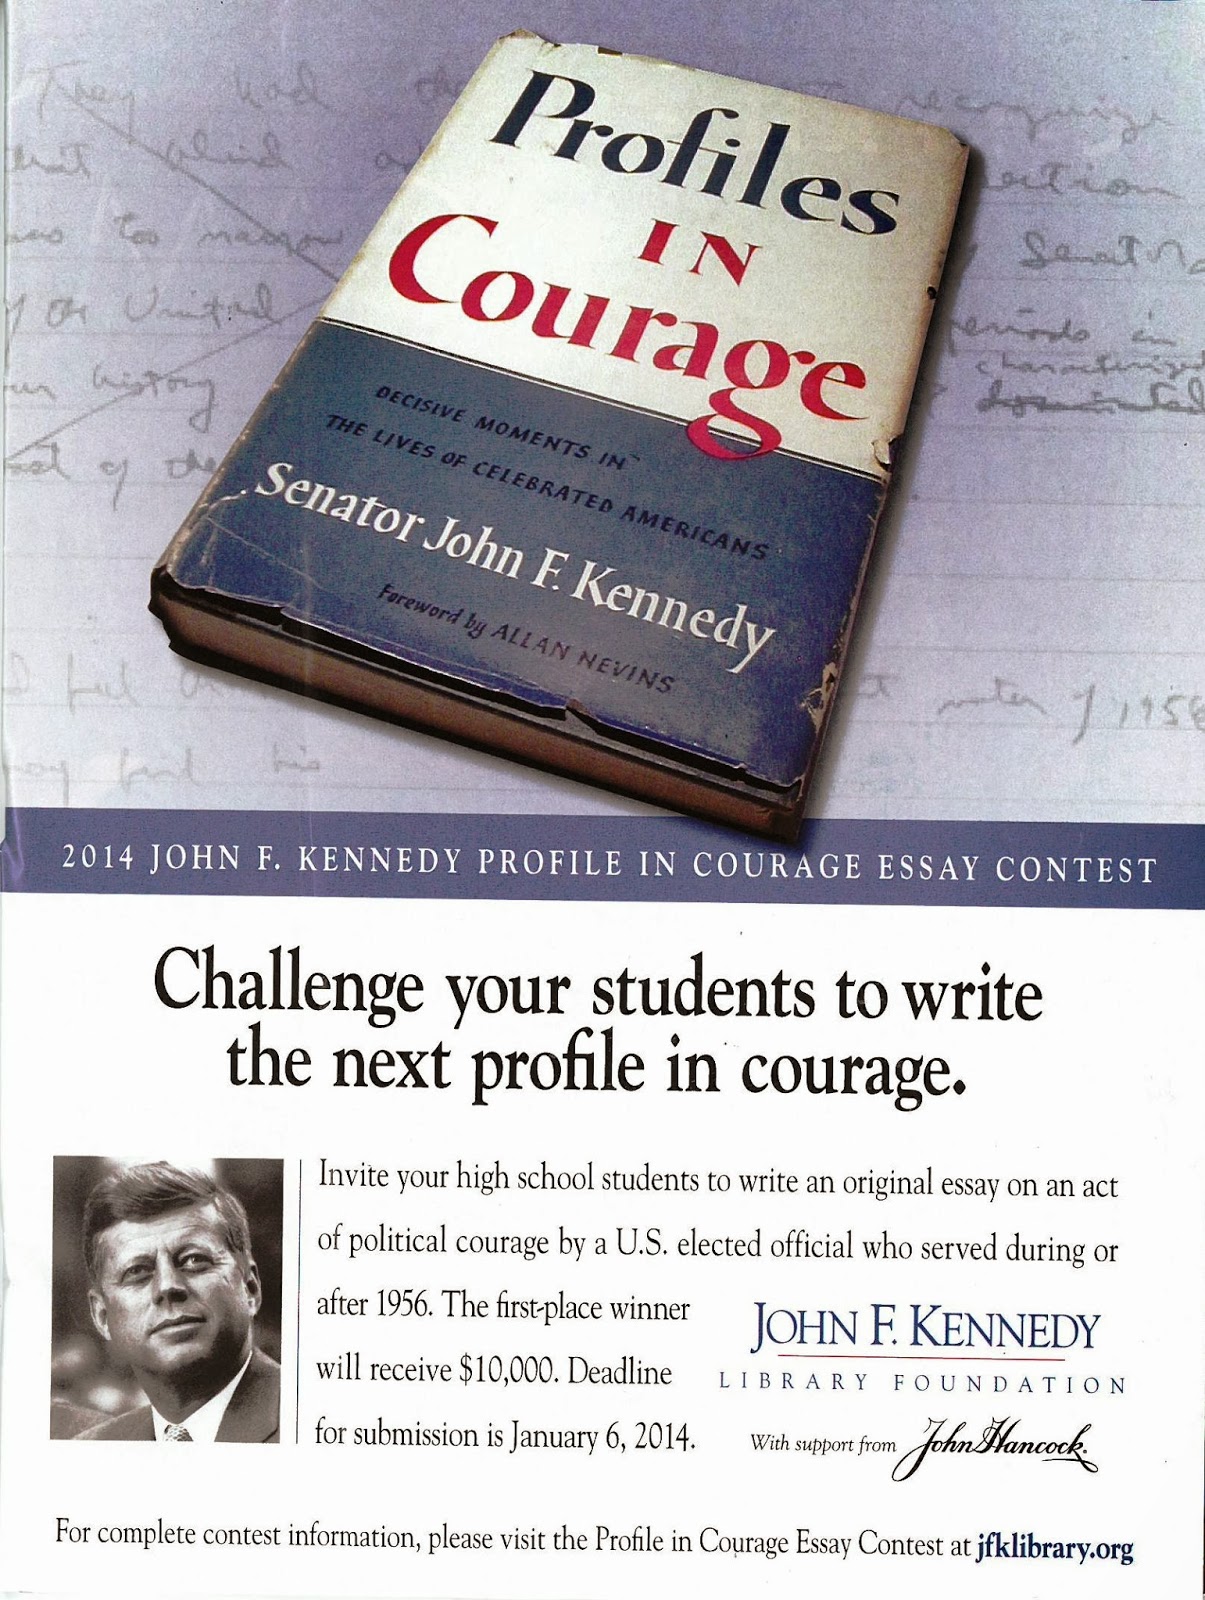 Profiles in courage essay contest 2013